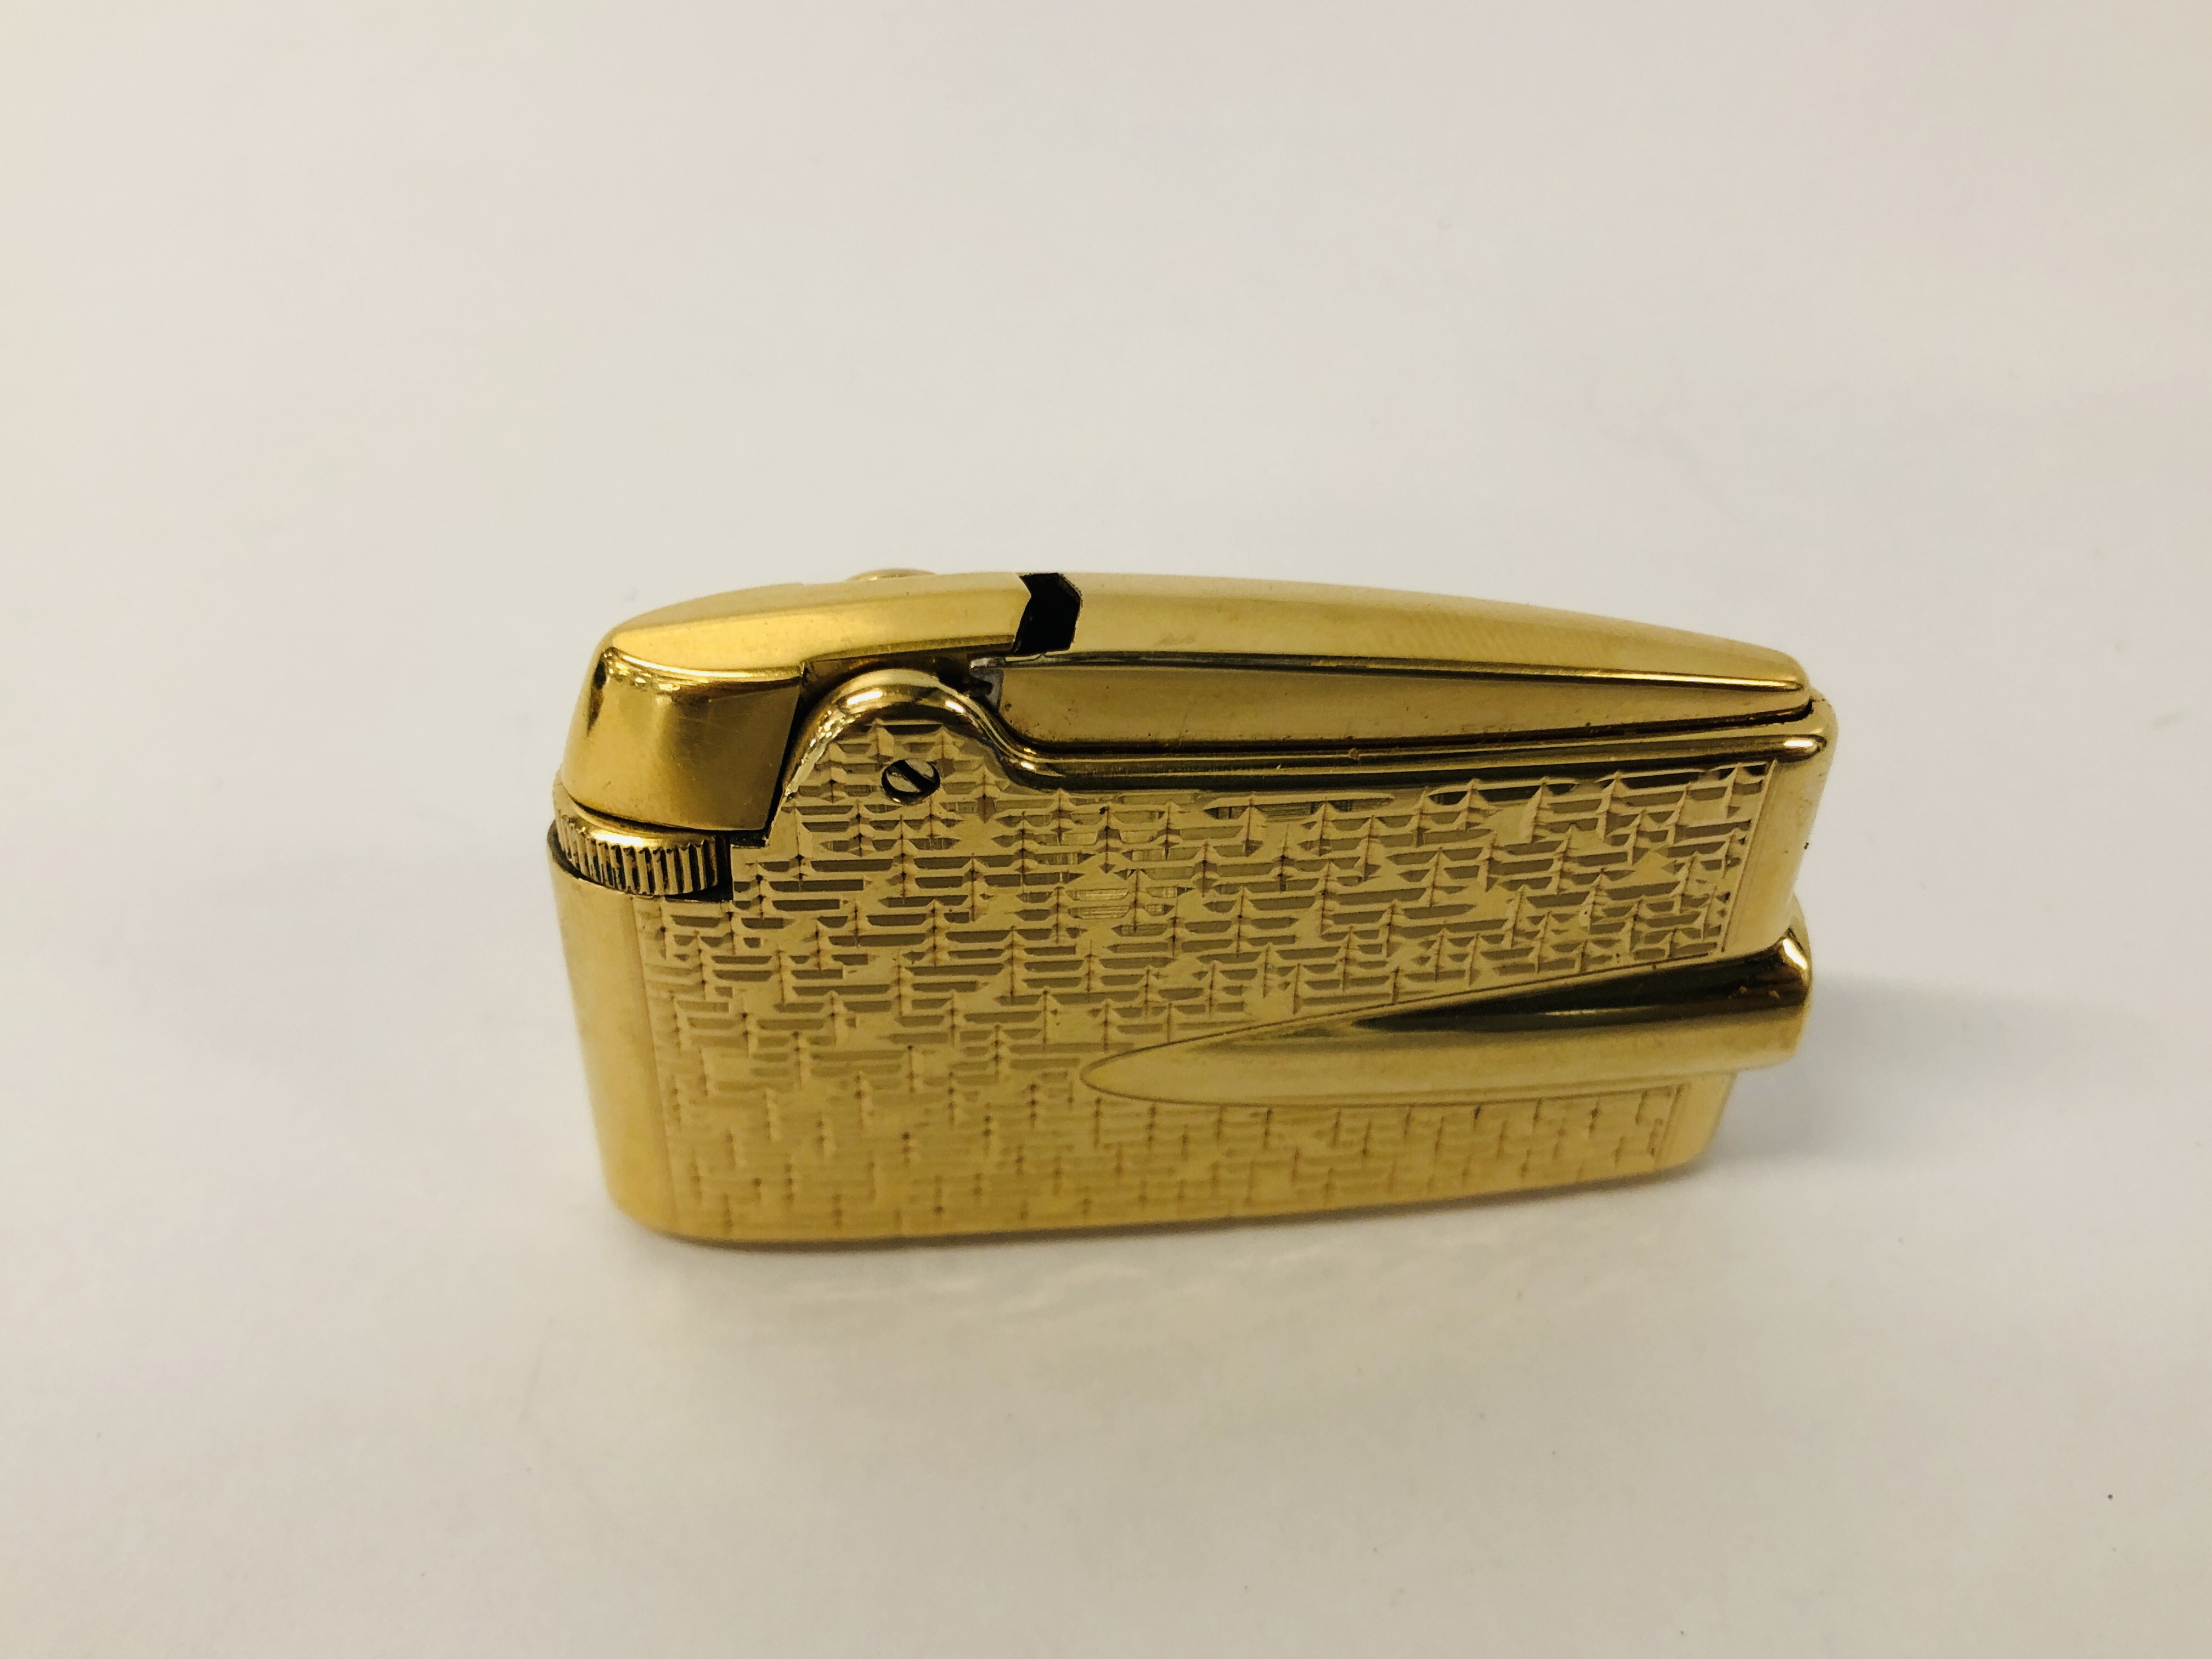 A RONSON ADONIS VARAFLAME GOLD FINISH POCKET CIGARETTE LIGHTER STAMPED "RPLD" AND "9.375". - Image 4 of 9